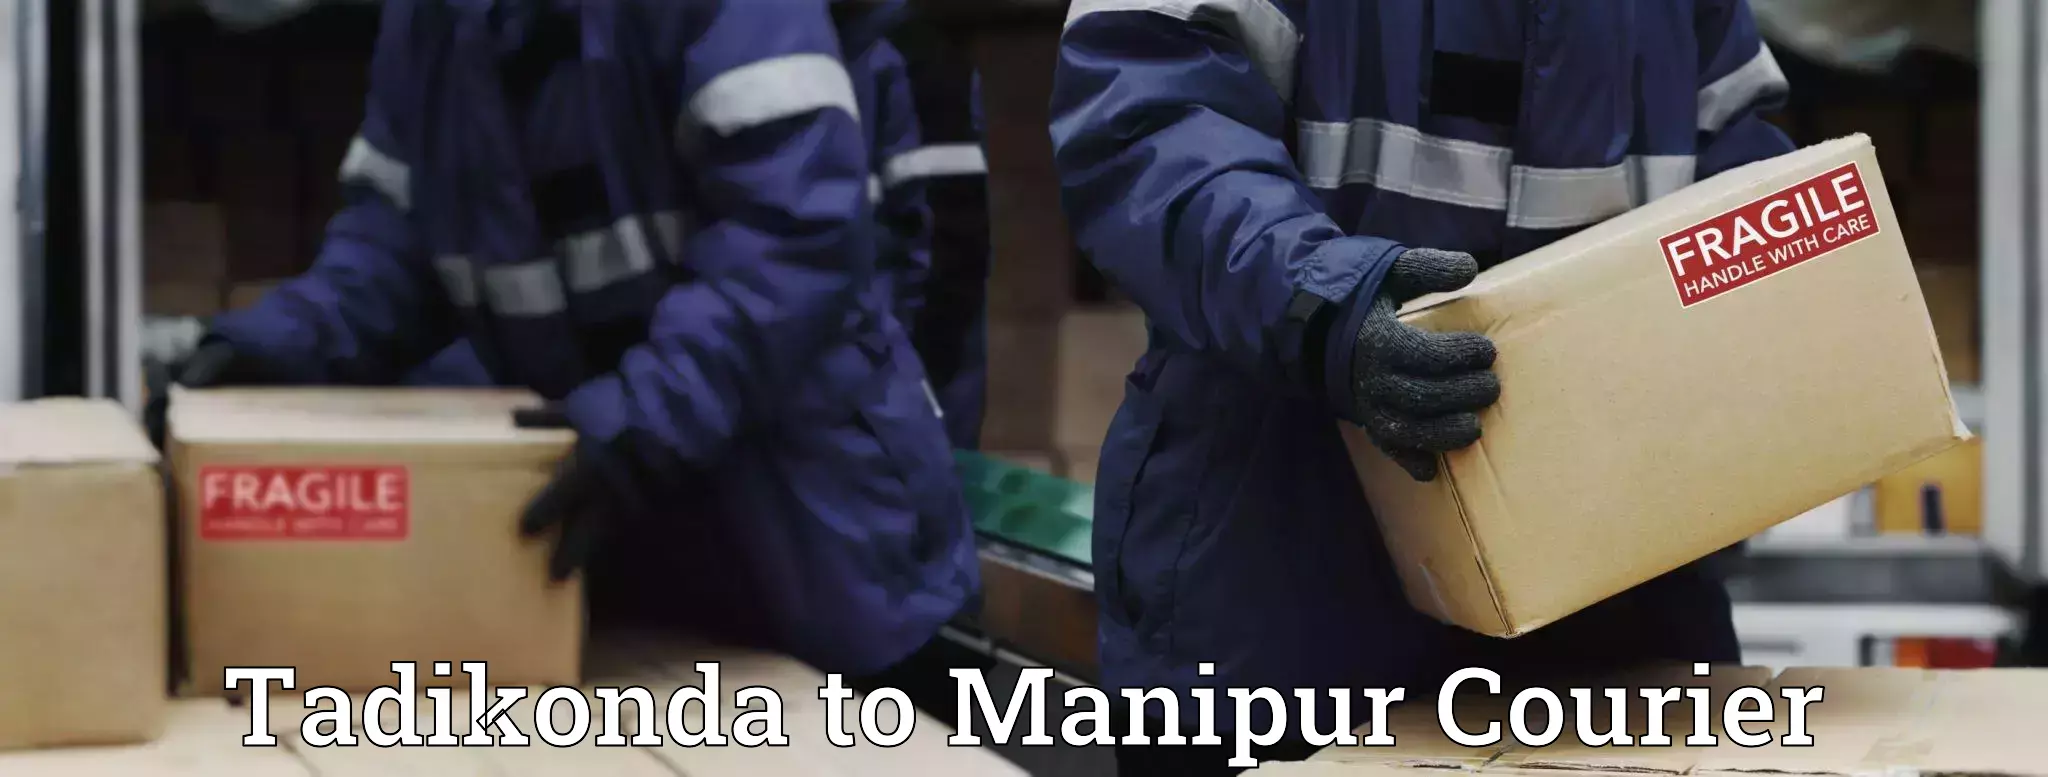 Courier service partnerships Tadikonda to Manipur